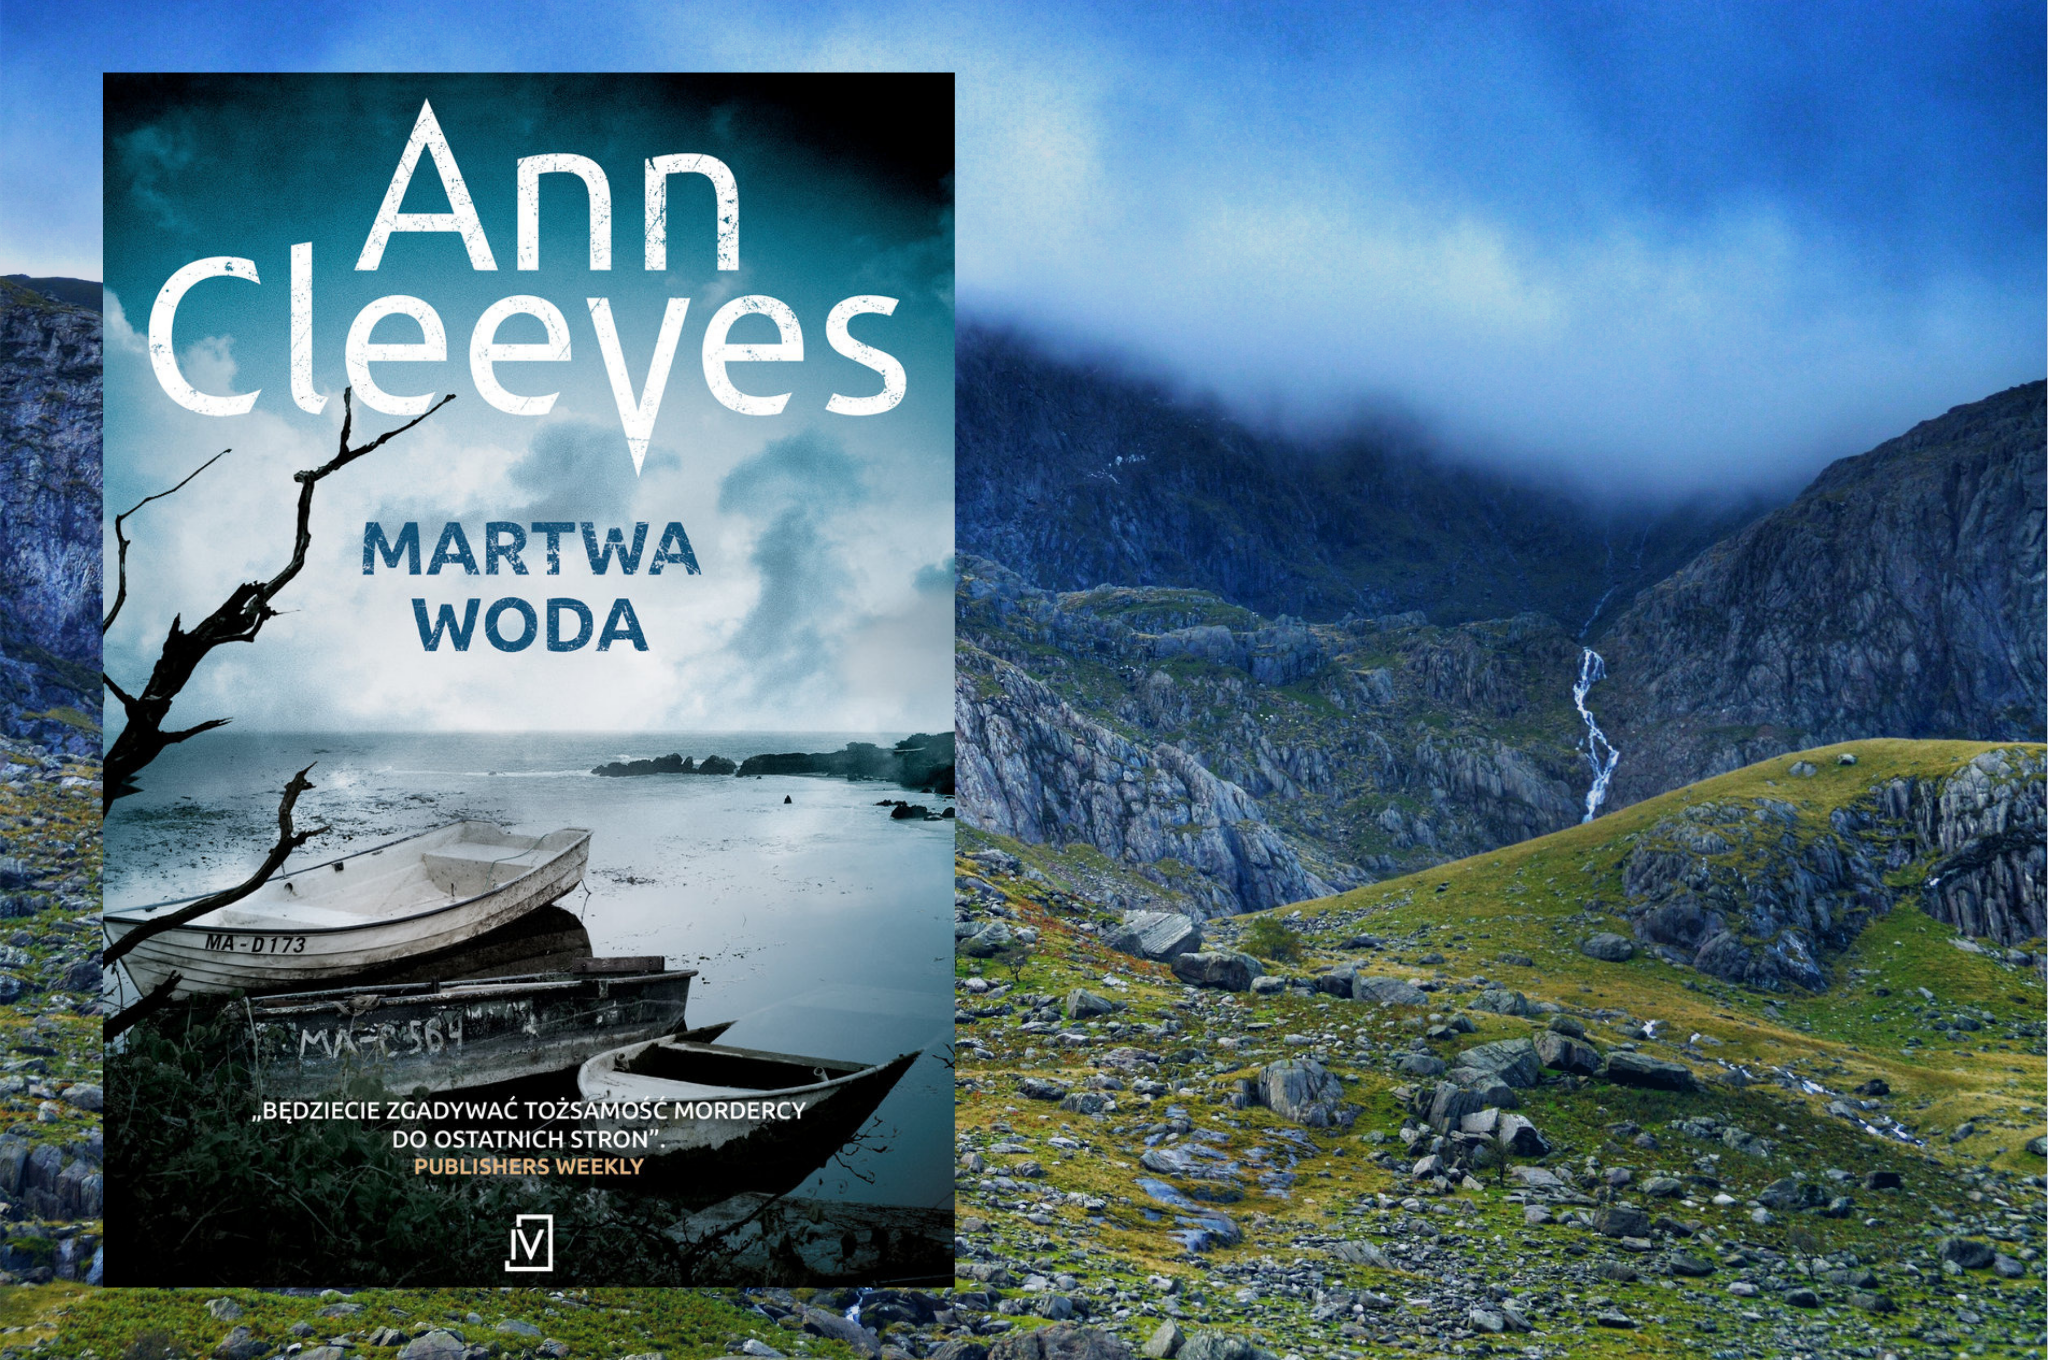 Ann Cleeves "Martwa woda"